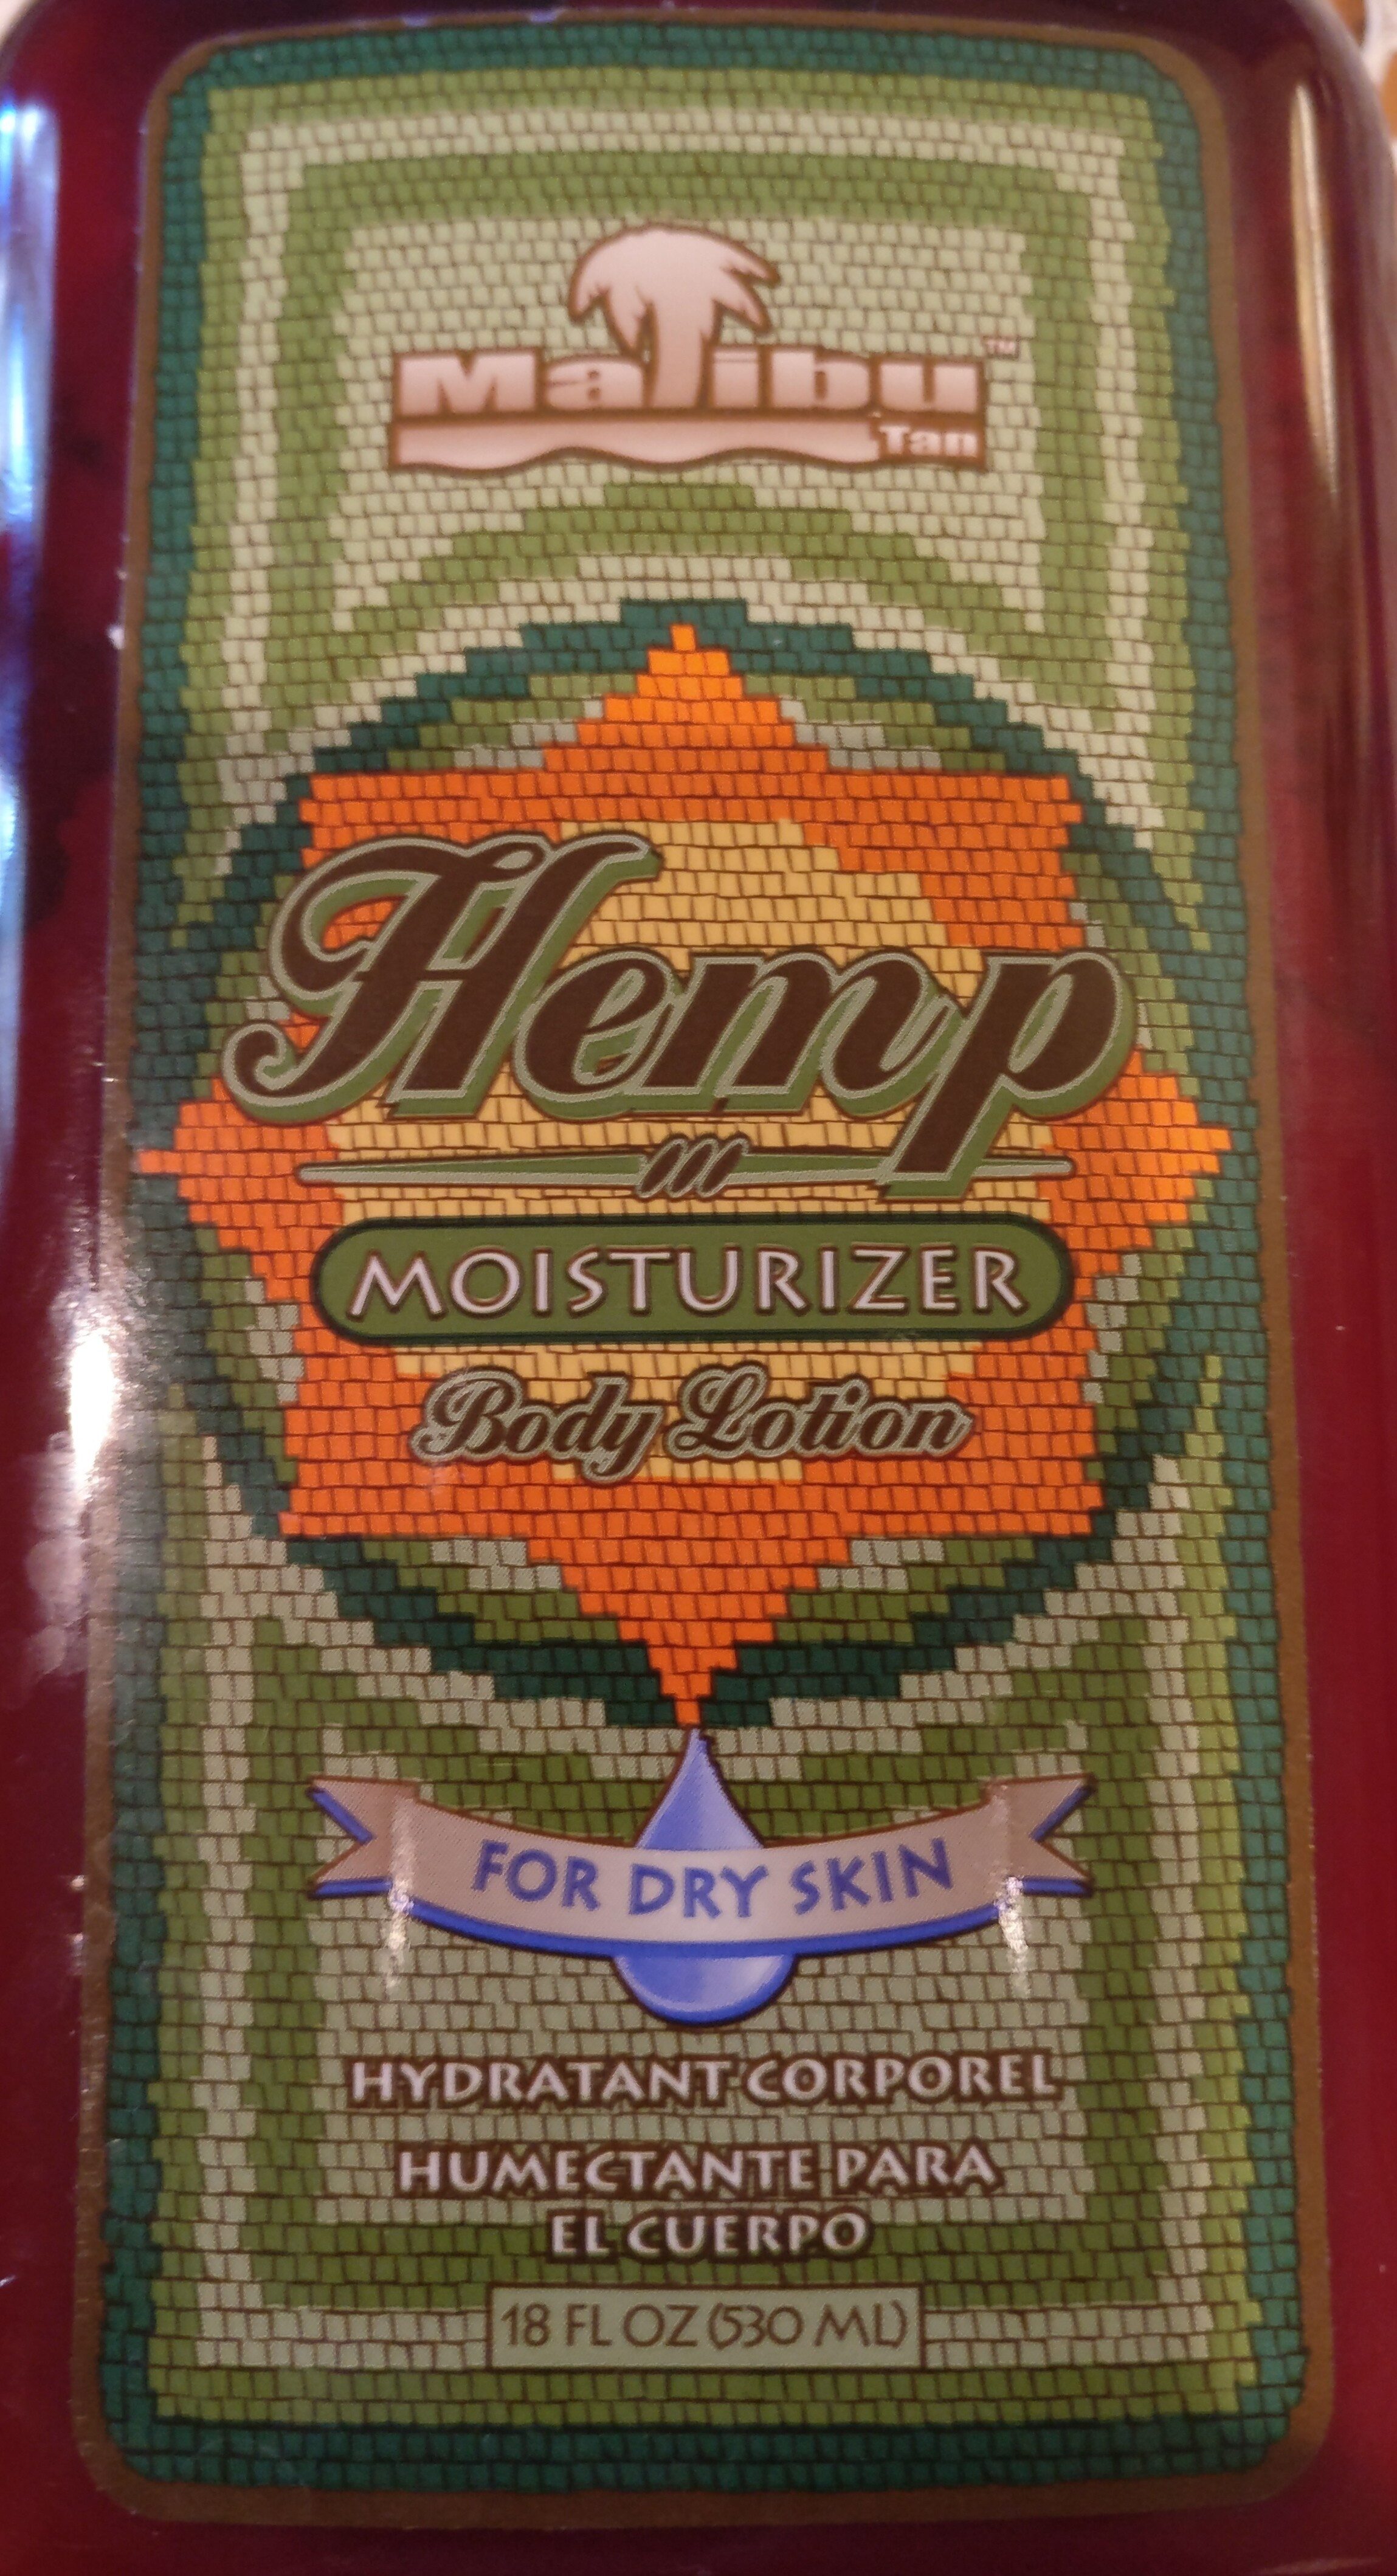 malibu tan hemp moisturizer - Product - en